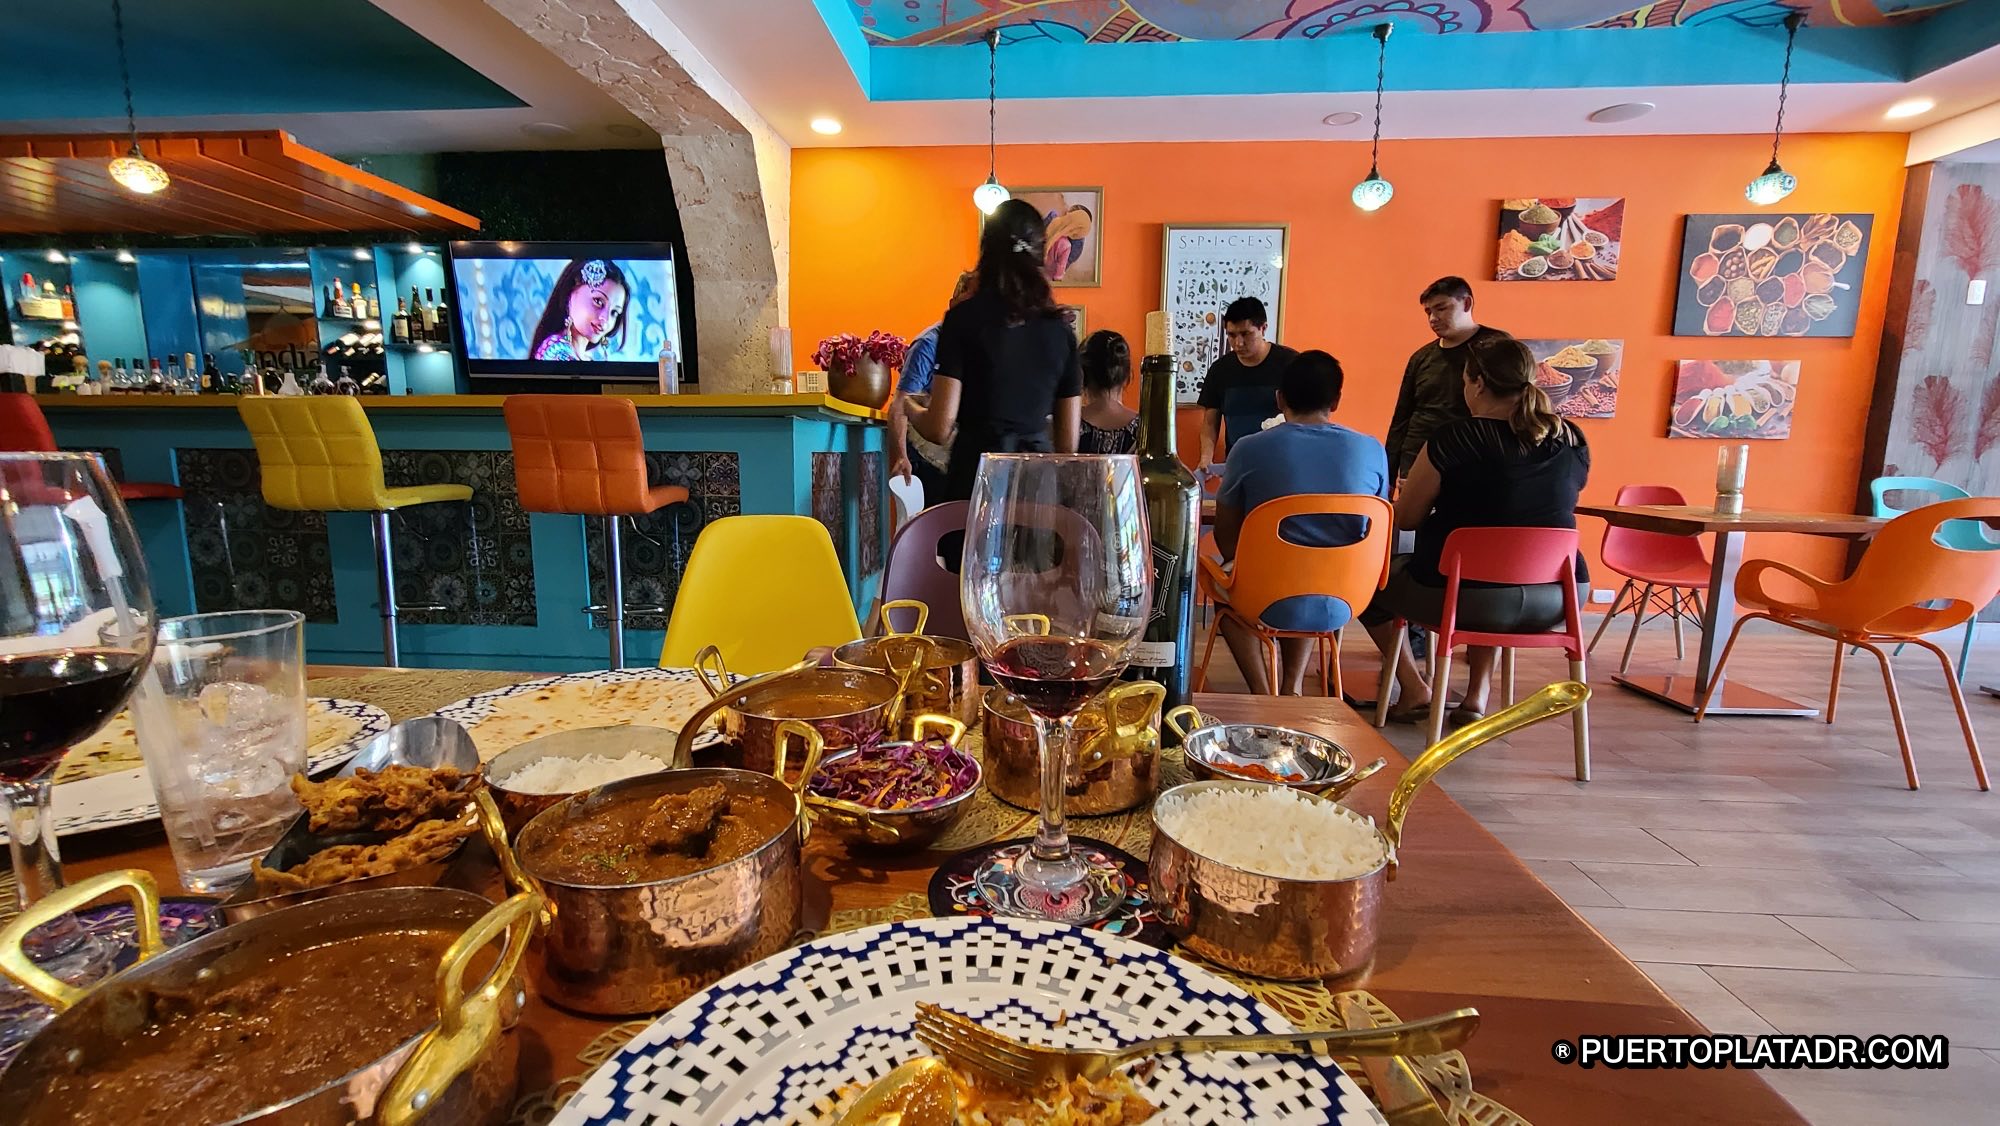 The bar at Taste of India restaurant in Puerto Plata Dominican Republic.